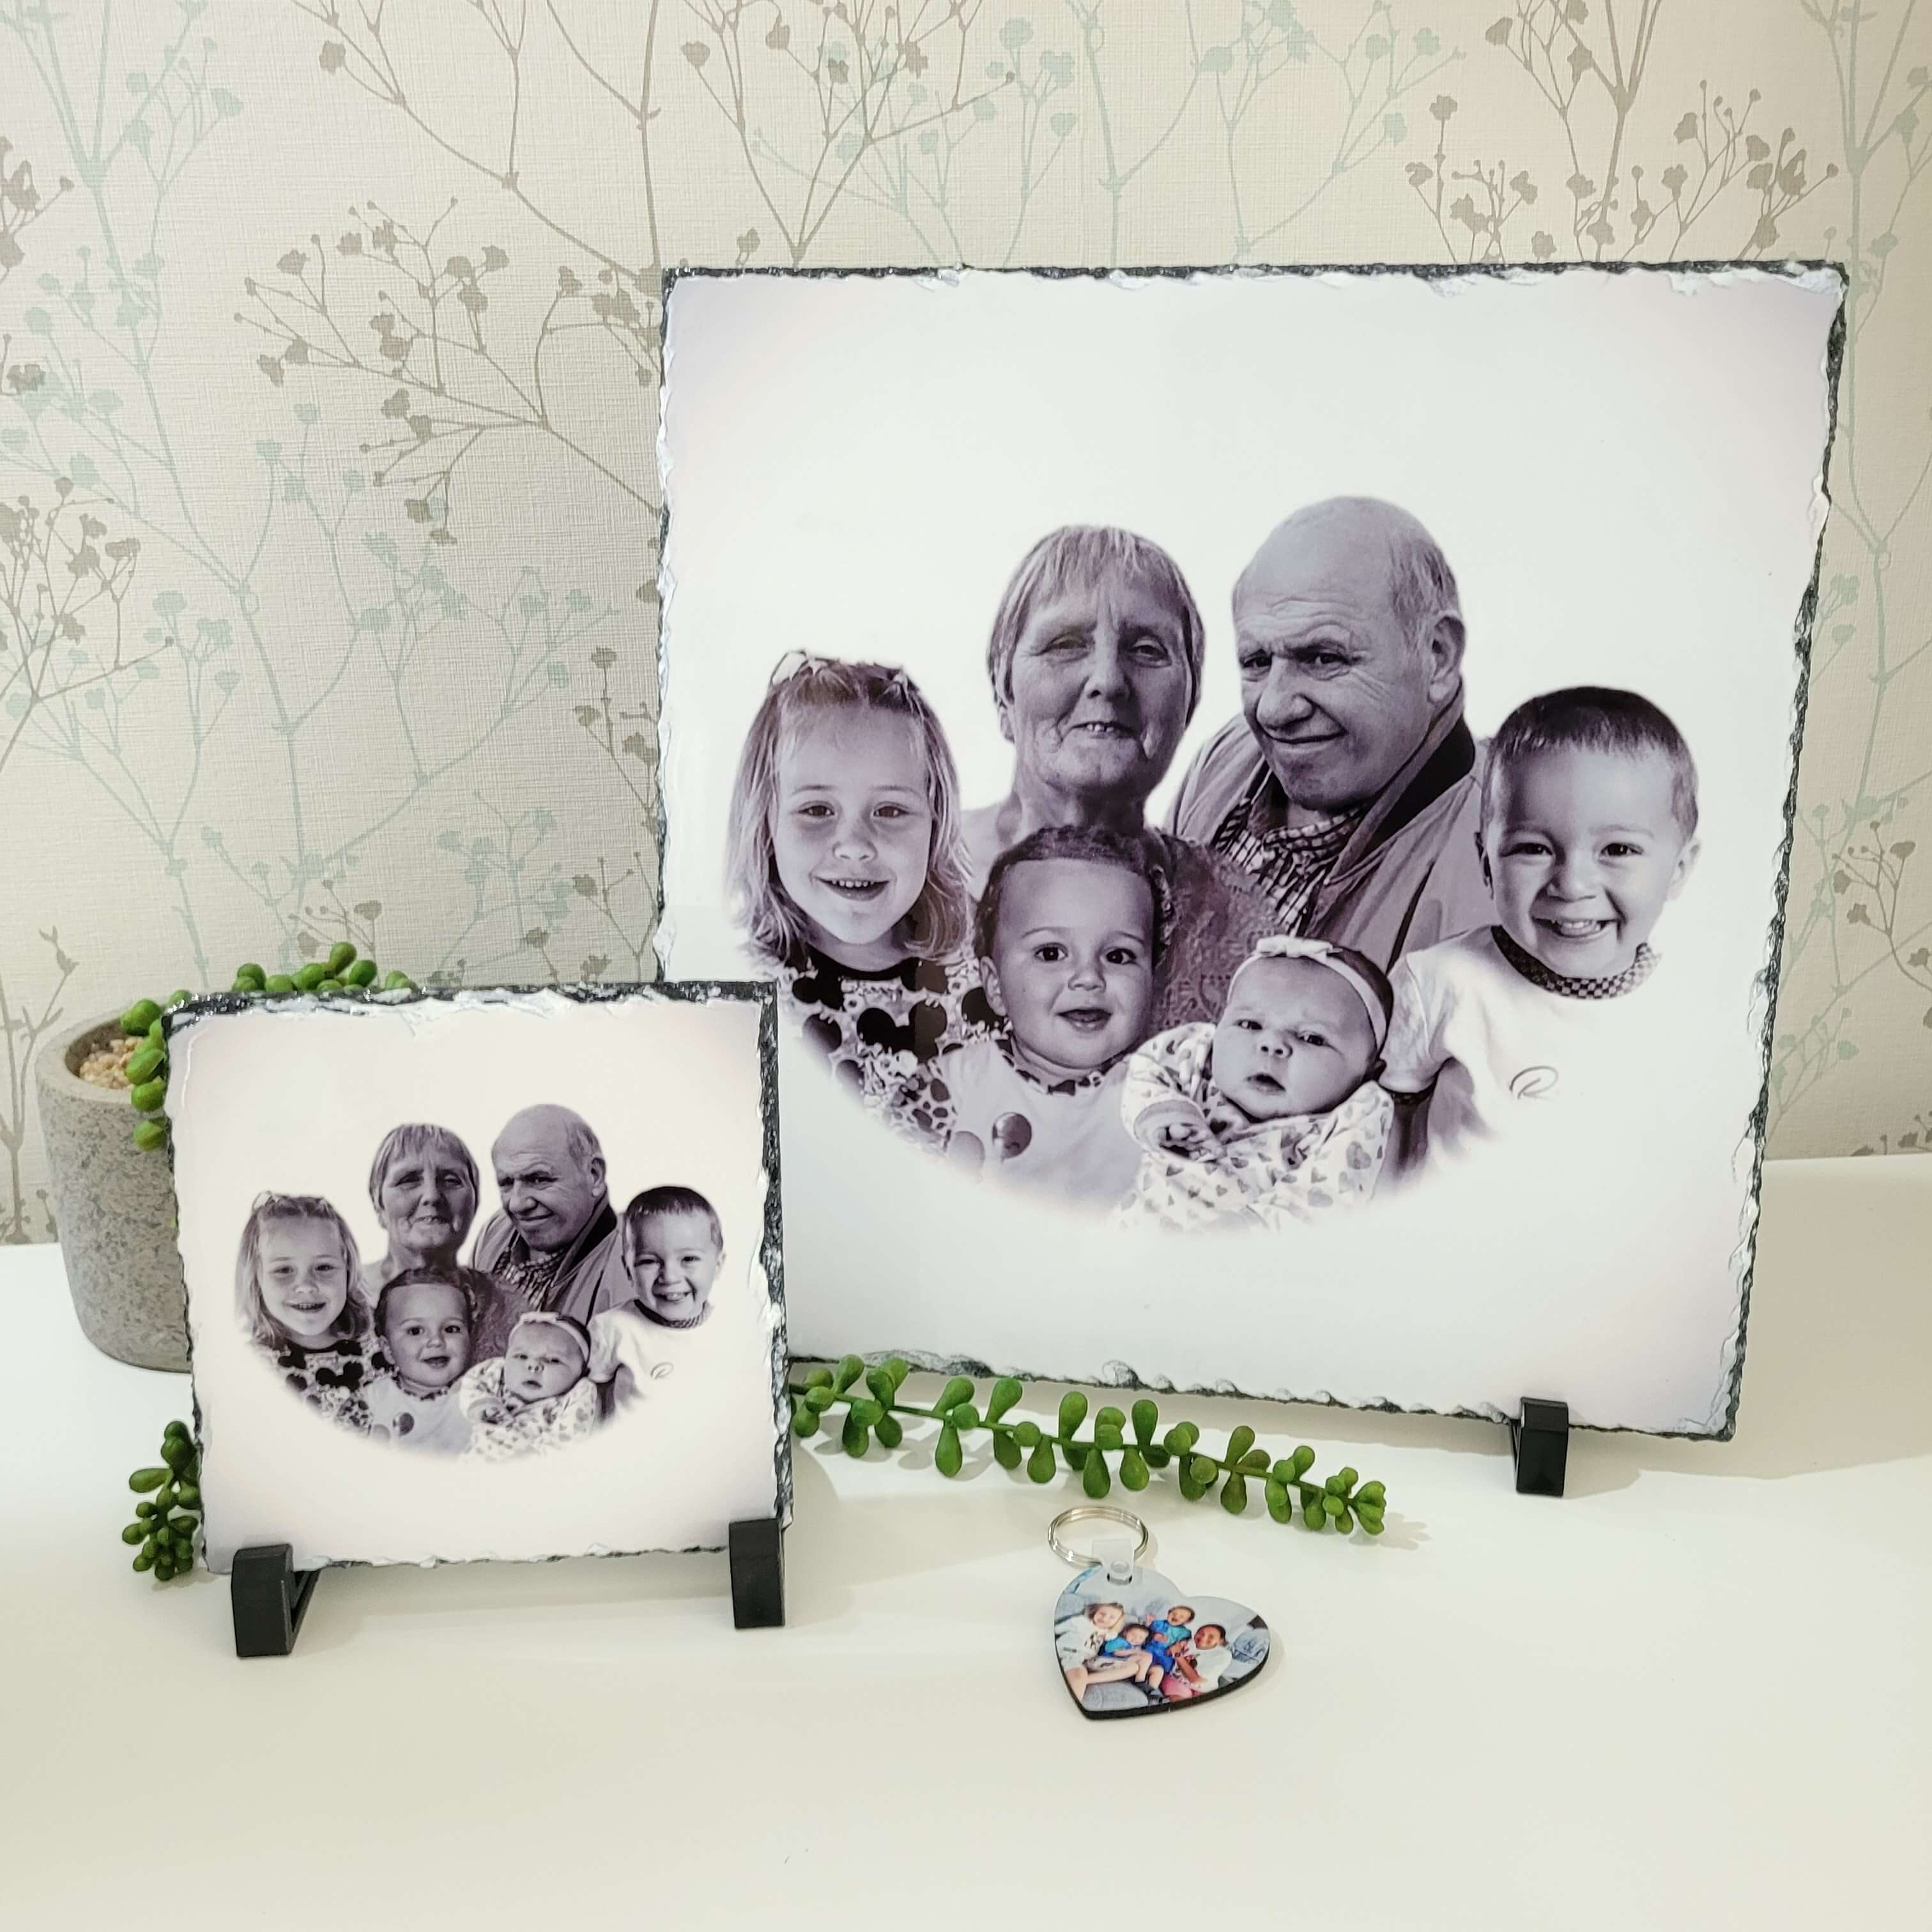 Handmade personalised gift - photo keepsake gift - photo slates - Moose and Goose gifts